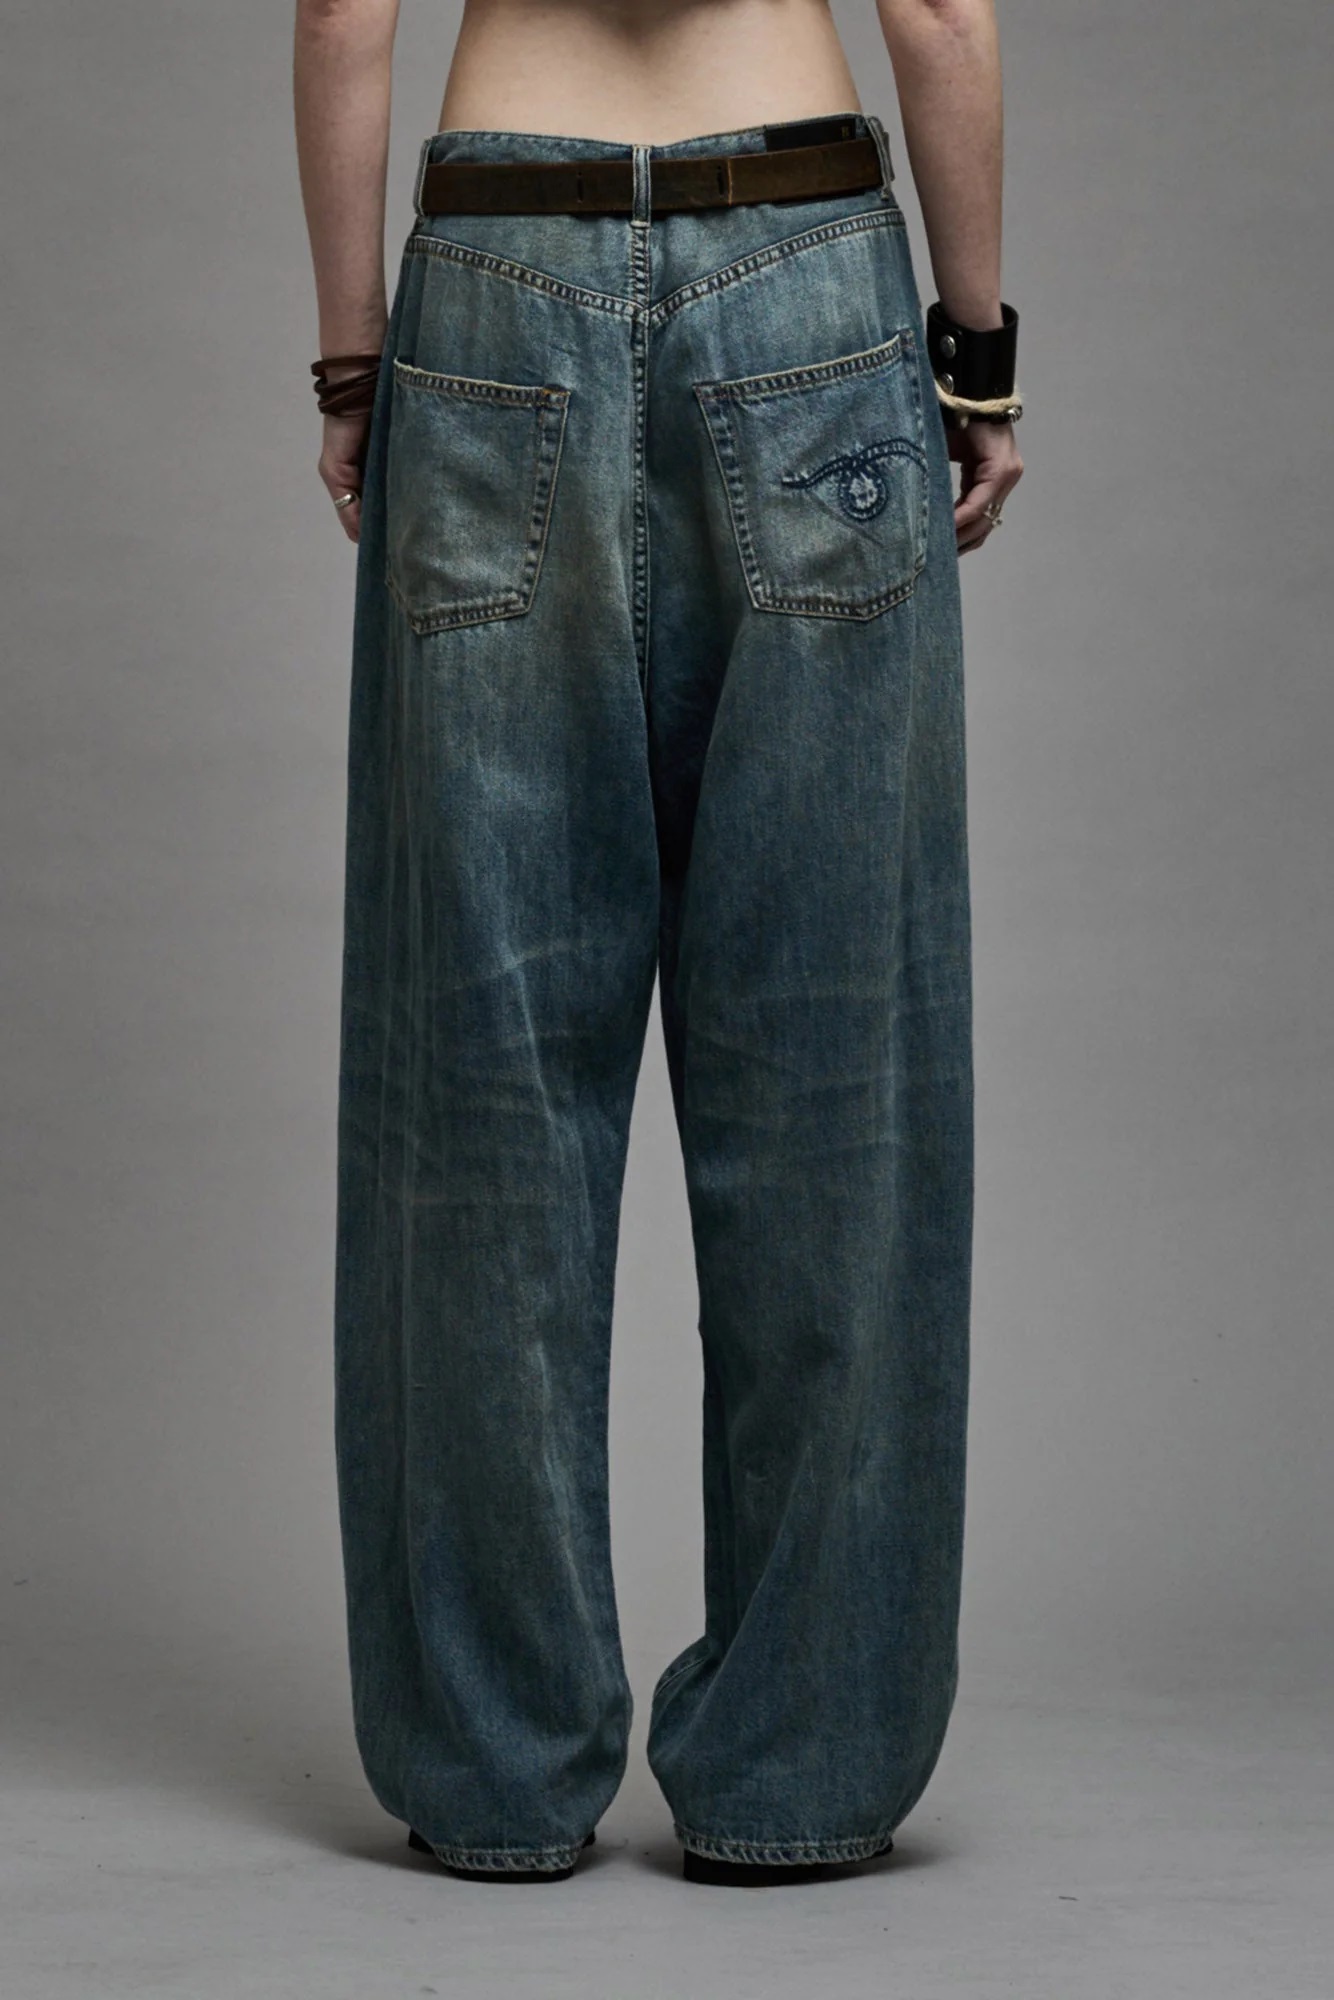 R13 Boyfriend Venti Jeans in Weber Linen Indigo 24